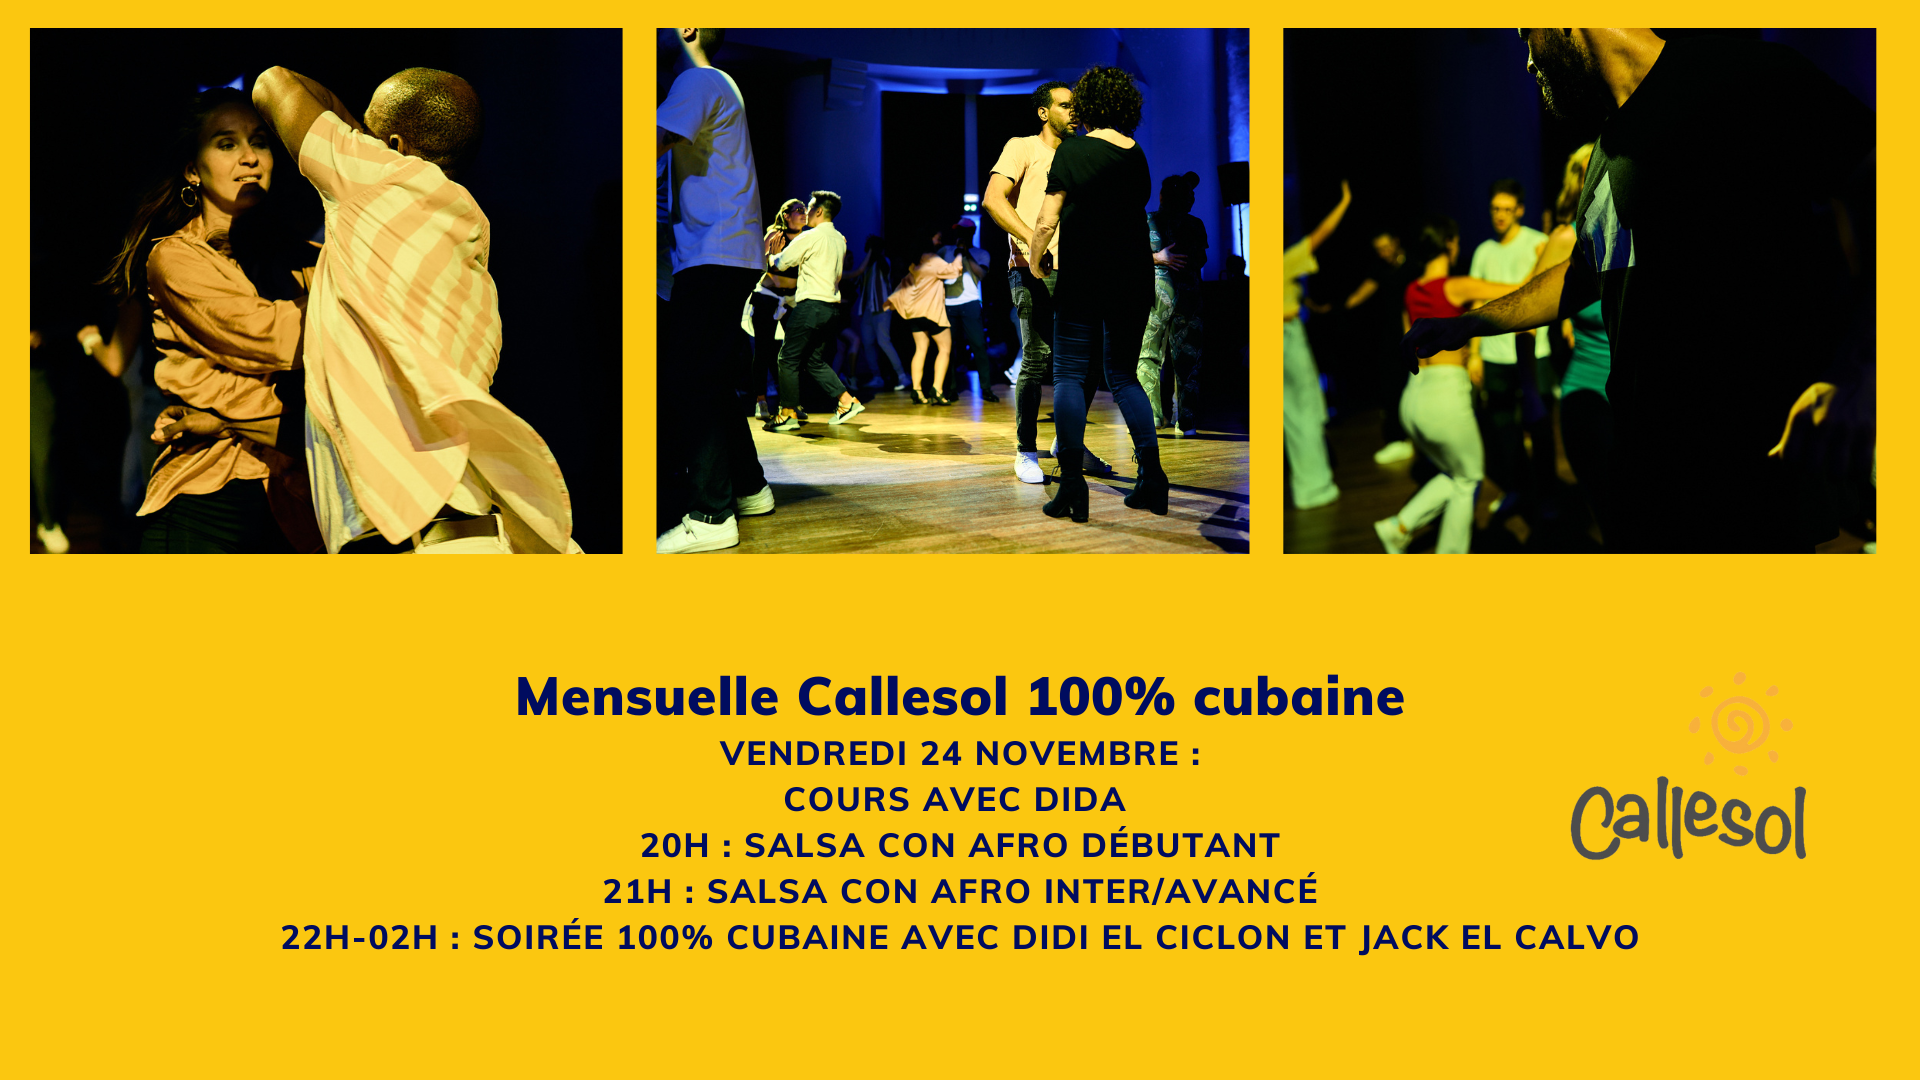 Mensuelle Callesol 100% cubaine le vendredi 24 novembre avec Didi, Jack el Calvo et Dida